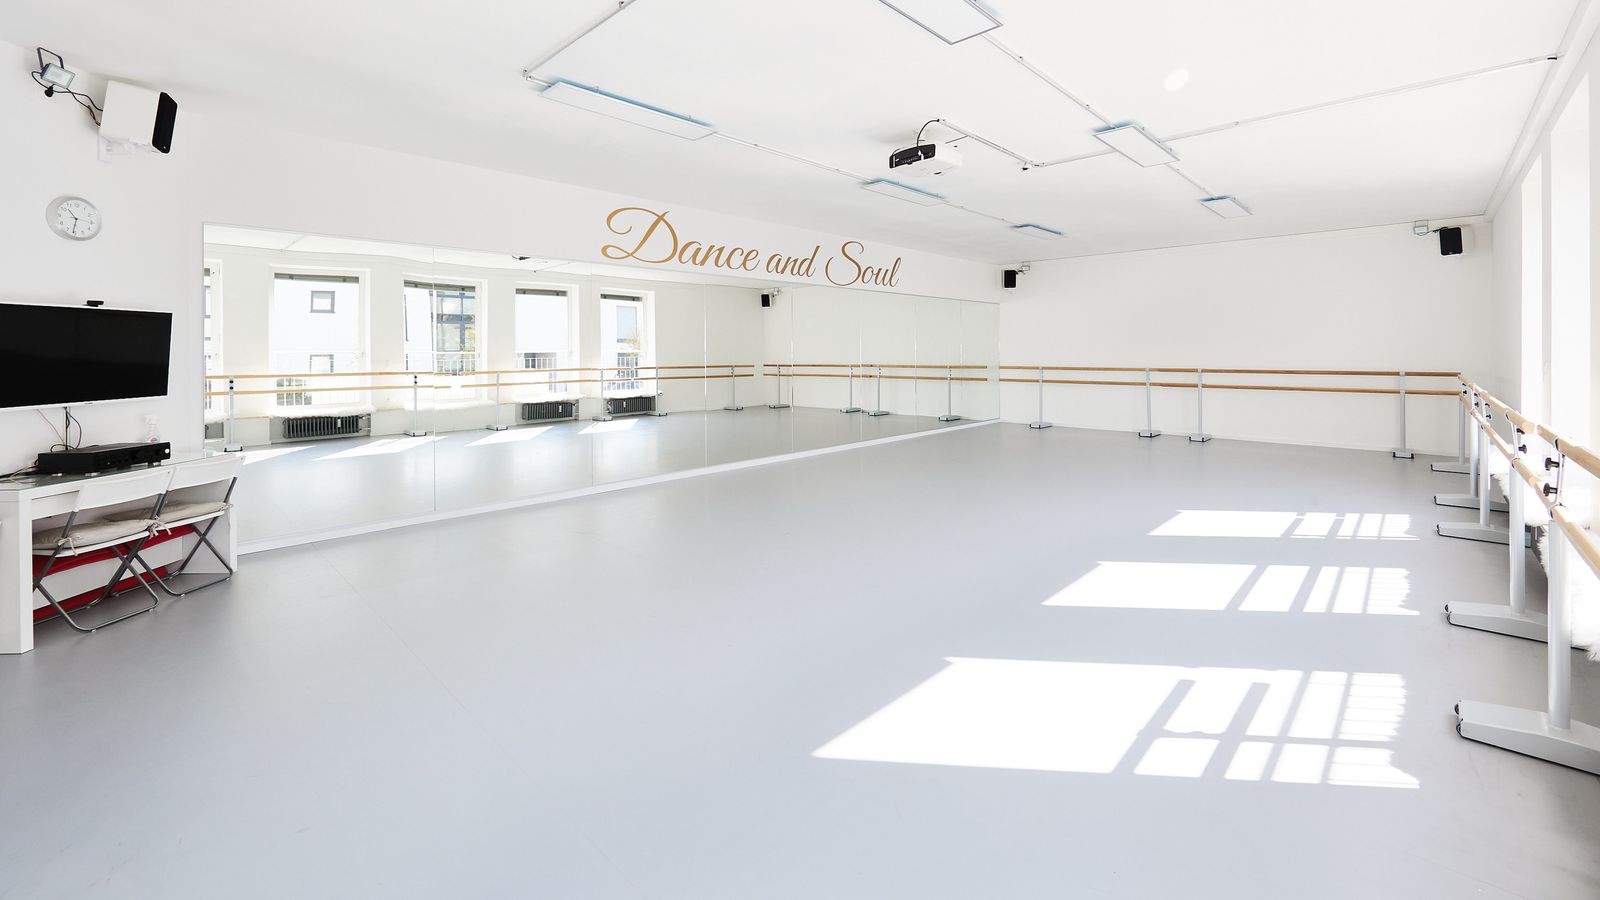 Dance and Soul, Ballett - und Tanzschule, München, Pasing, Saal 1